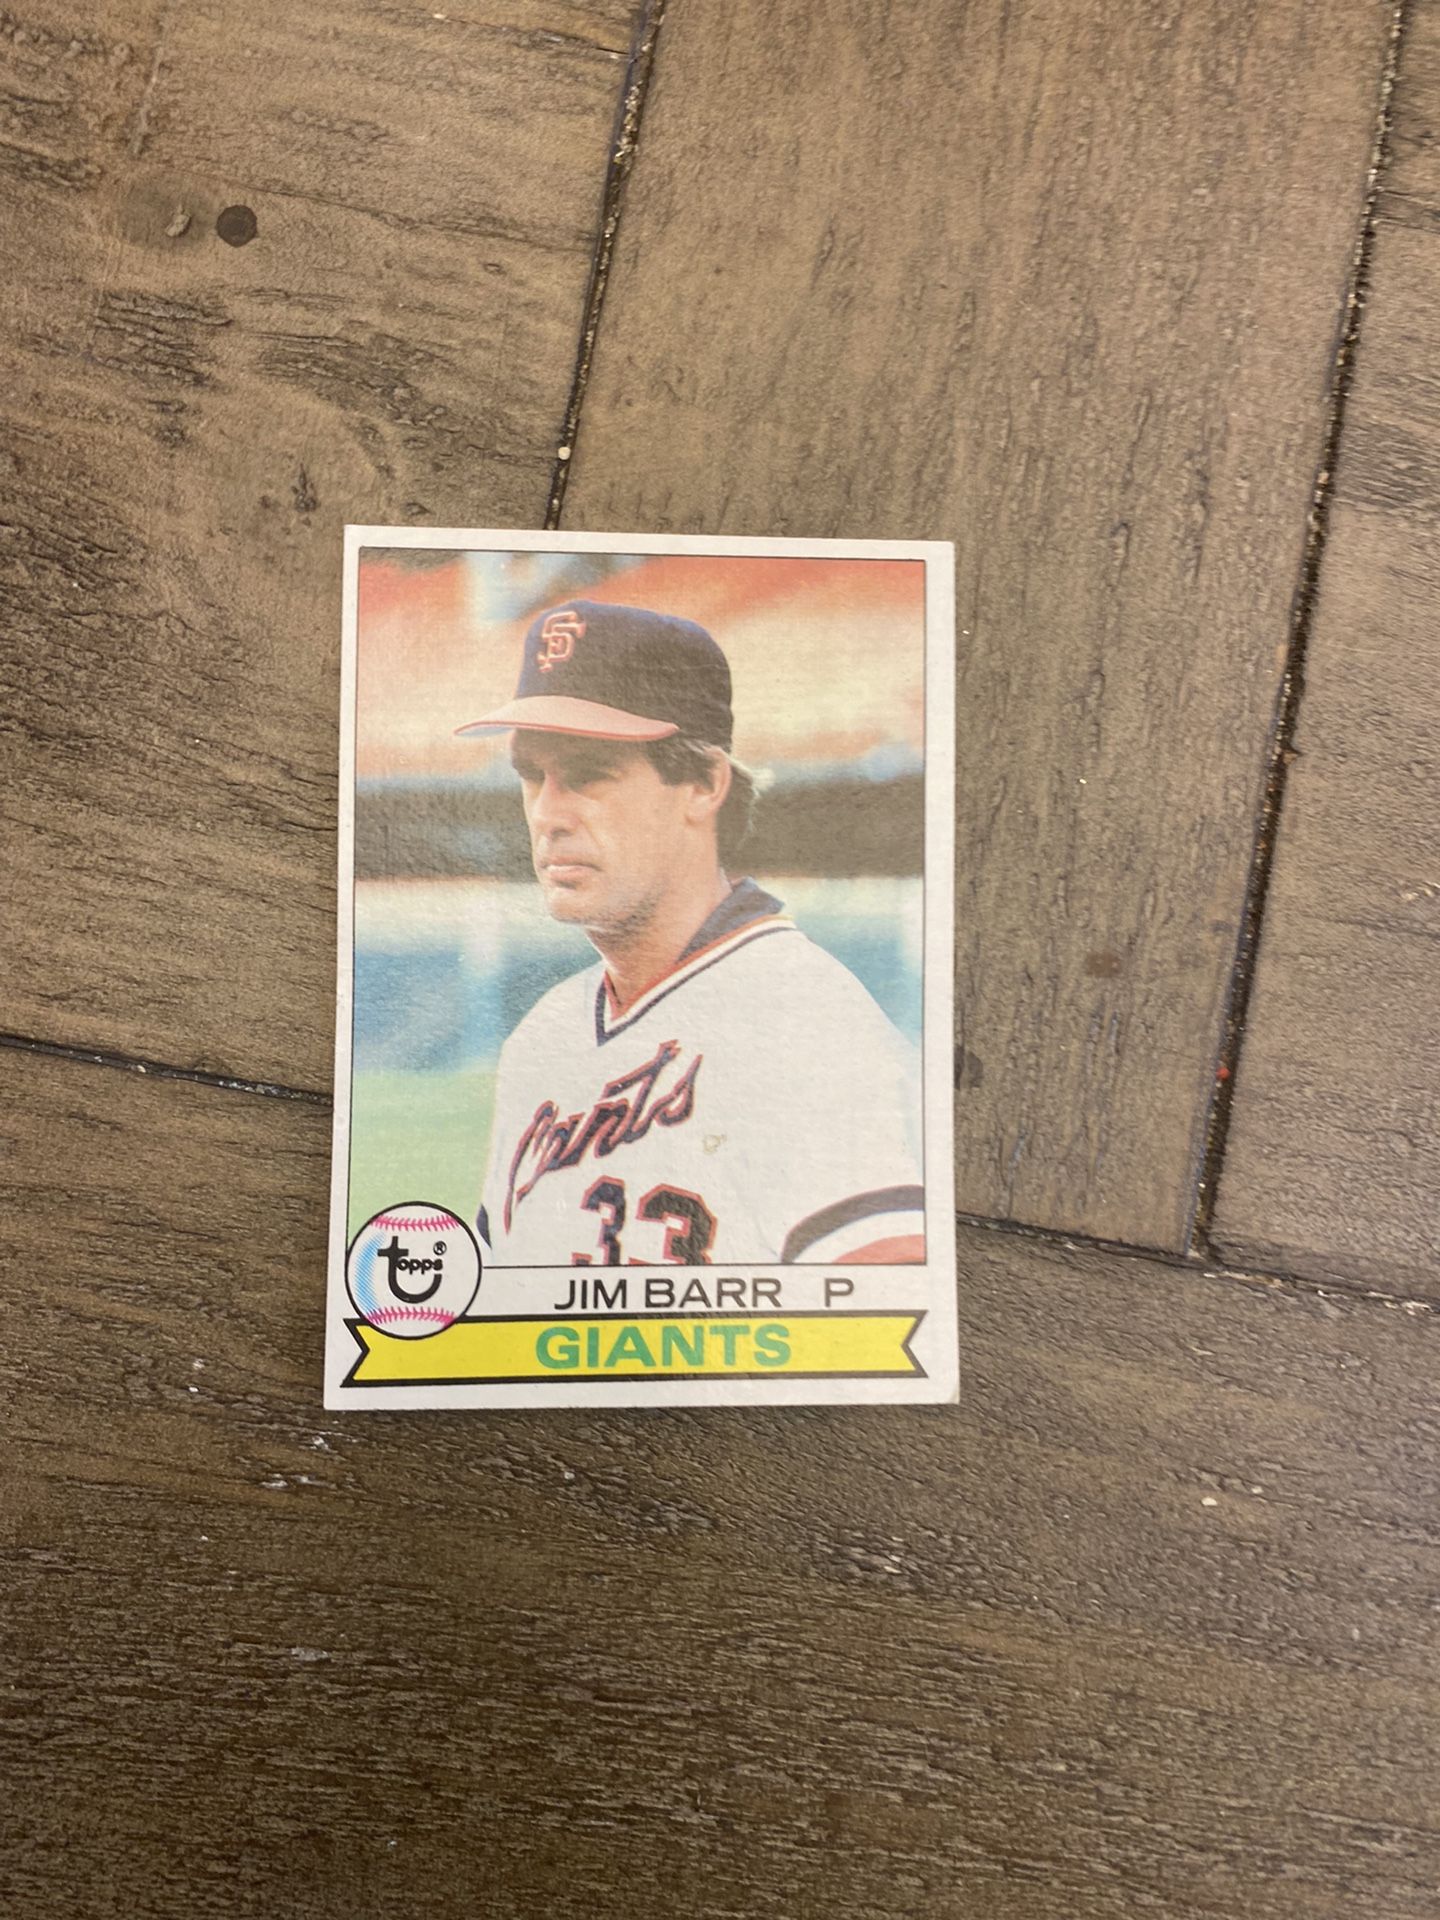 Jim Barr P Baseball Card 1970s